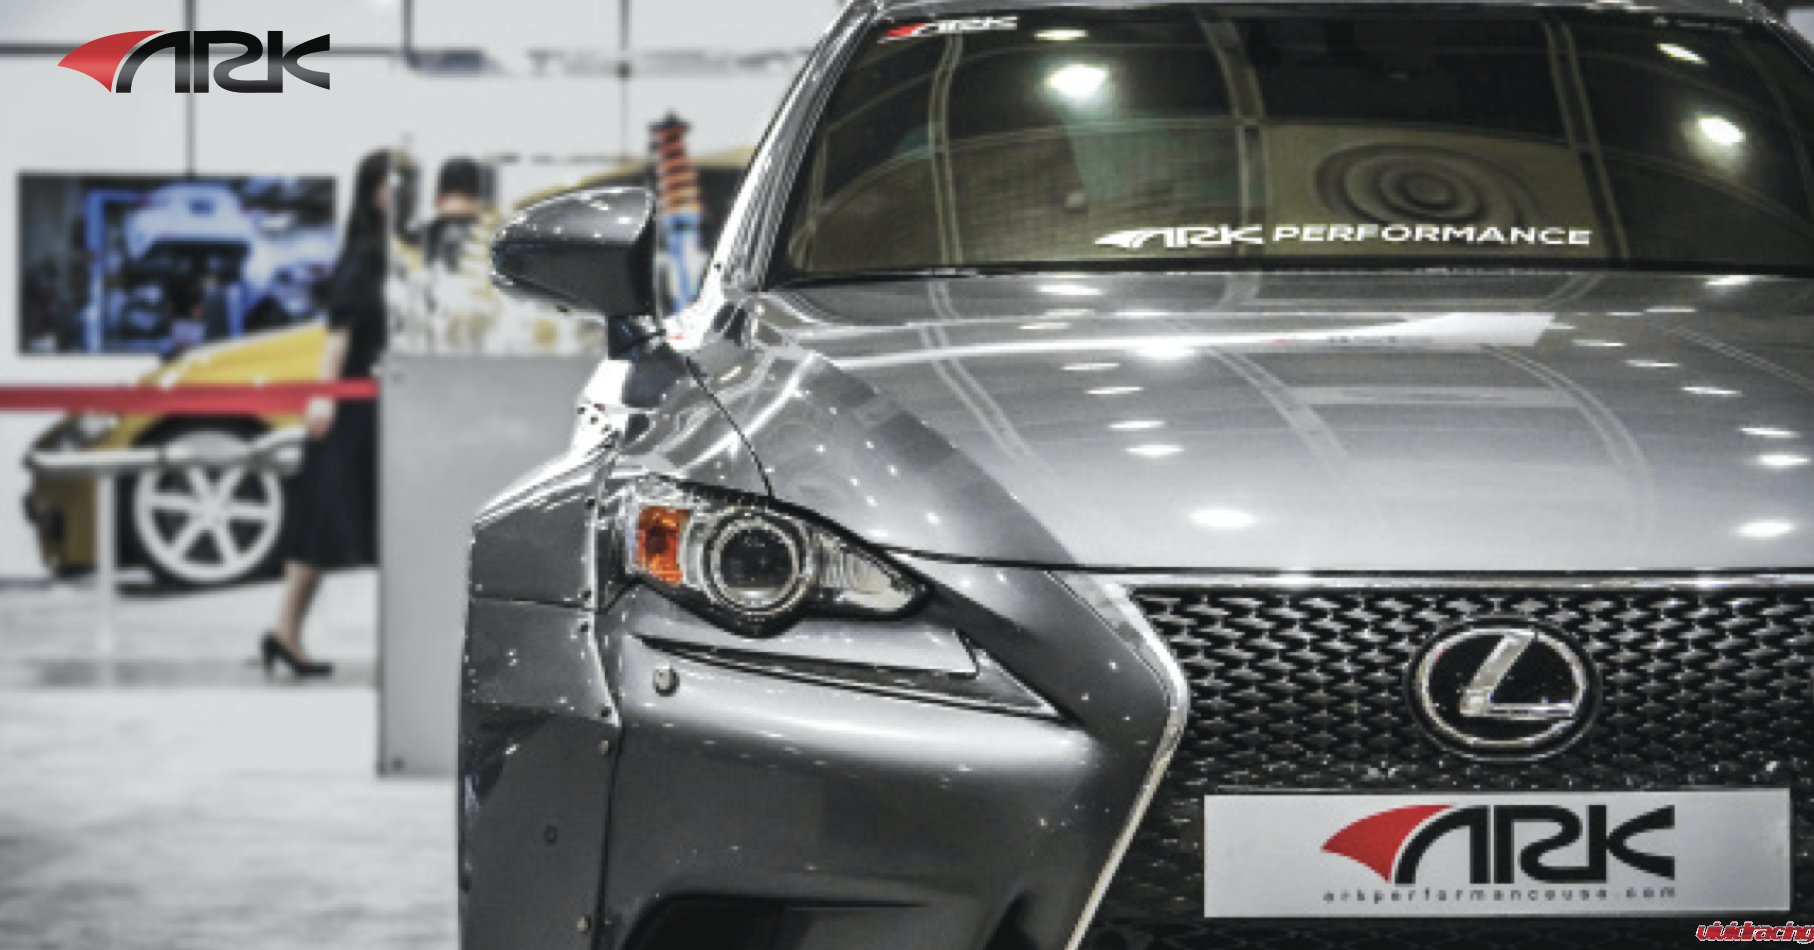 ARK Performance, Solus wide body kit, Lexus IS